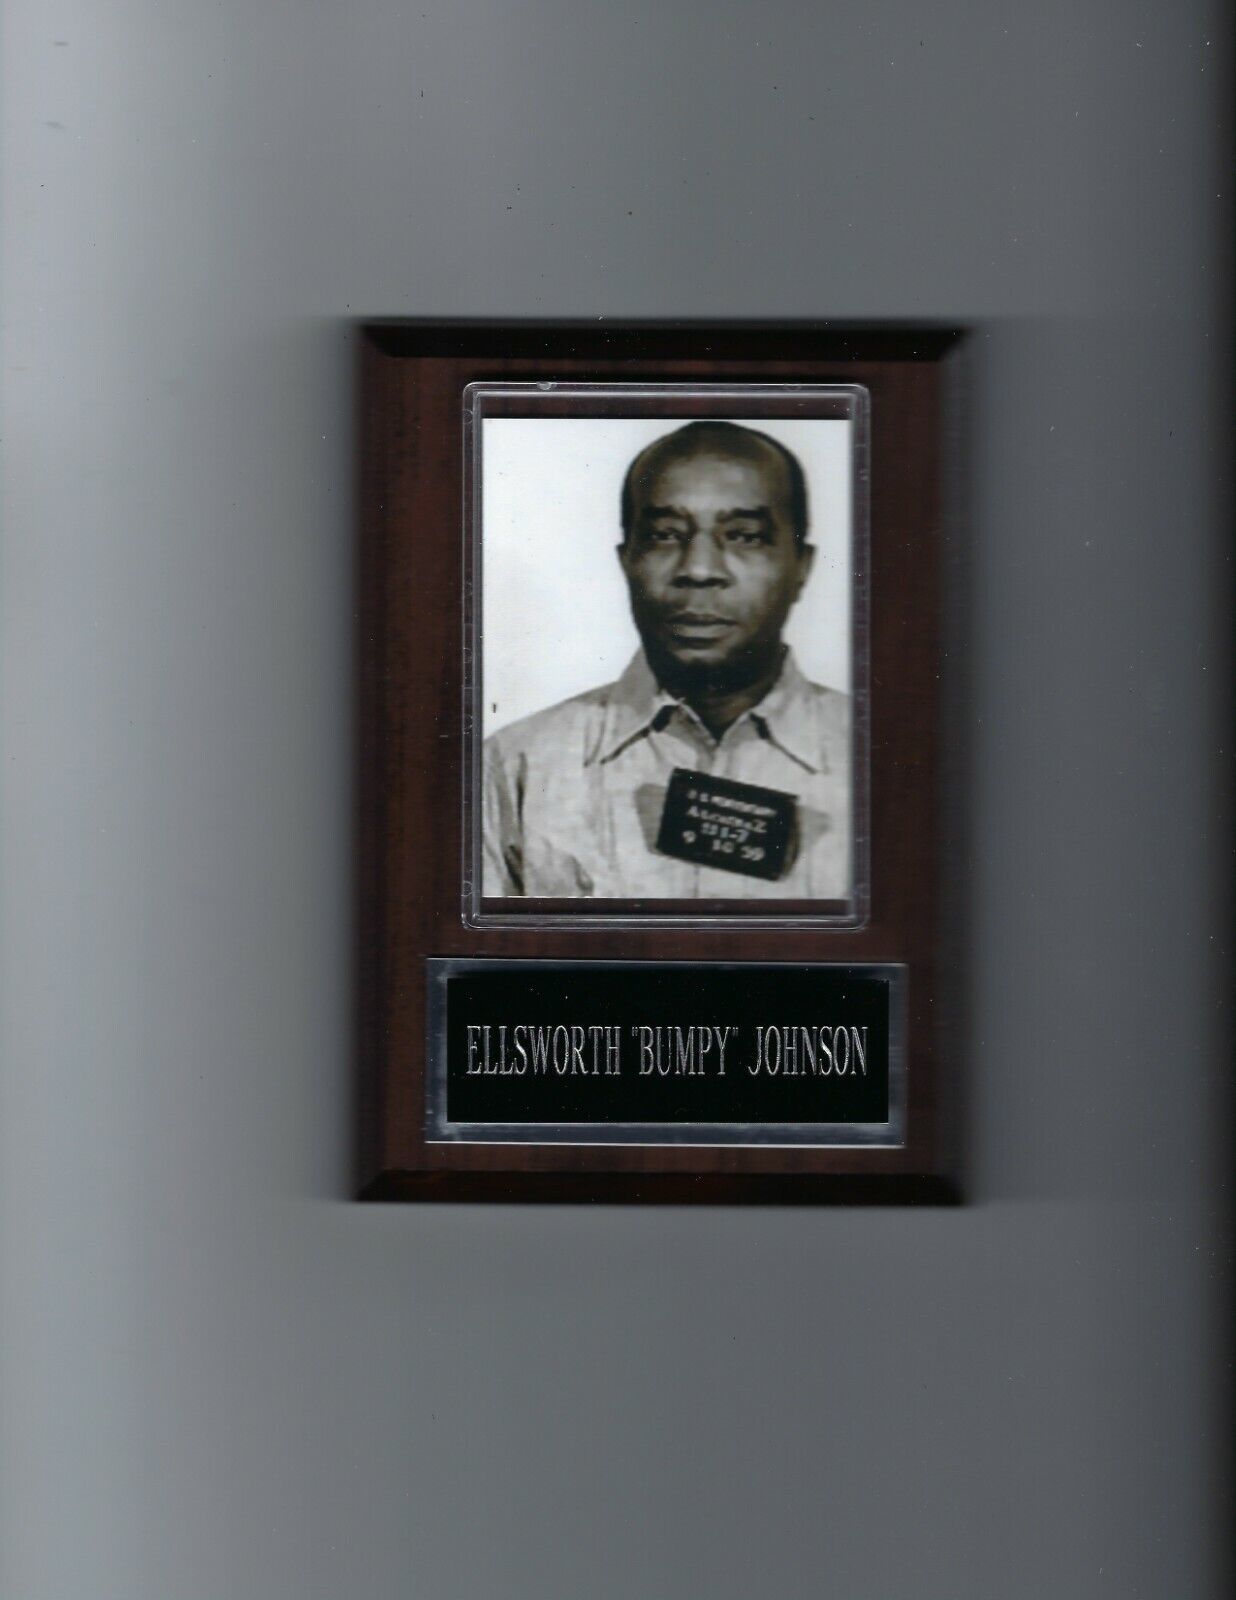 Primary image for ELLSWORTH BUMPY JOHNSON MUG SHOT PLAQUE MAFIA ORGANIZED CRIME MOBSTER MOB HARLEM